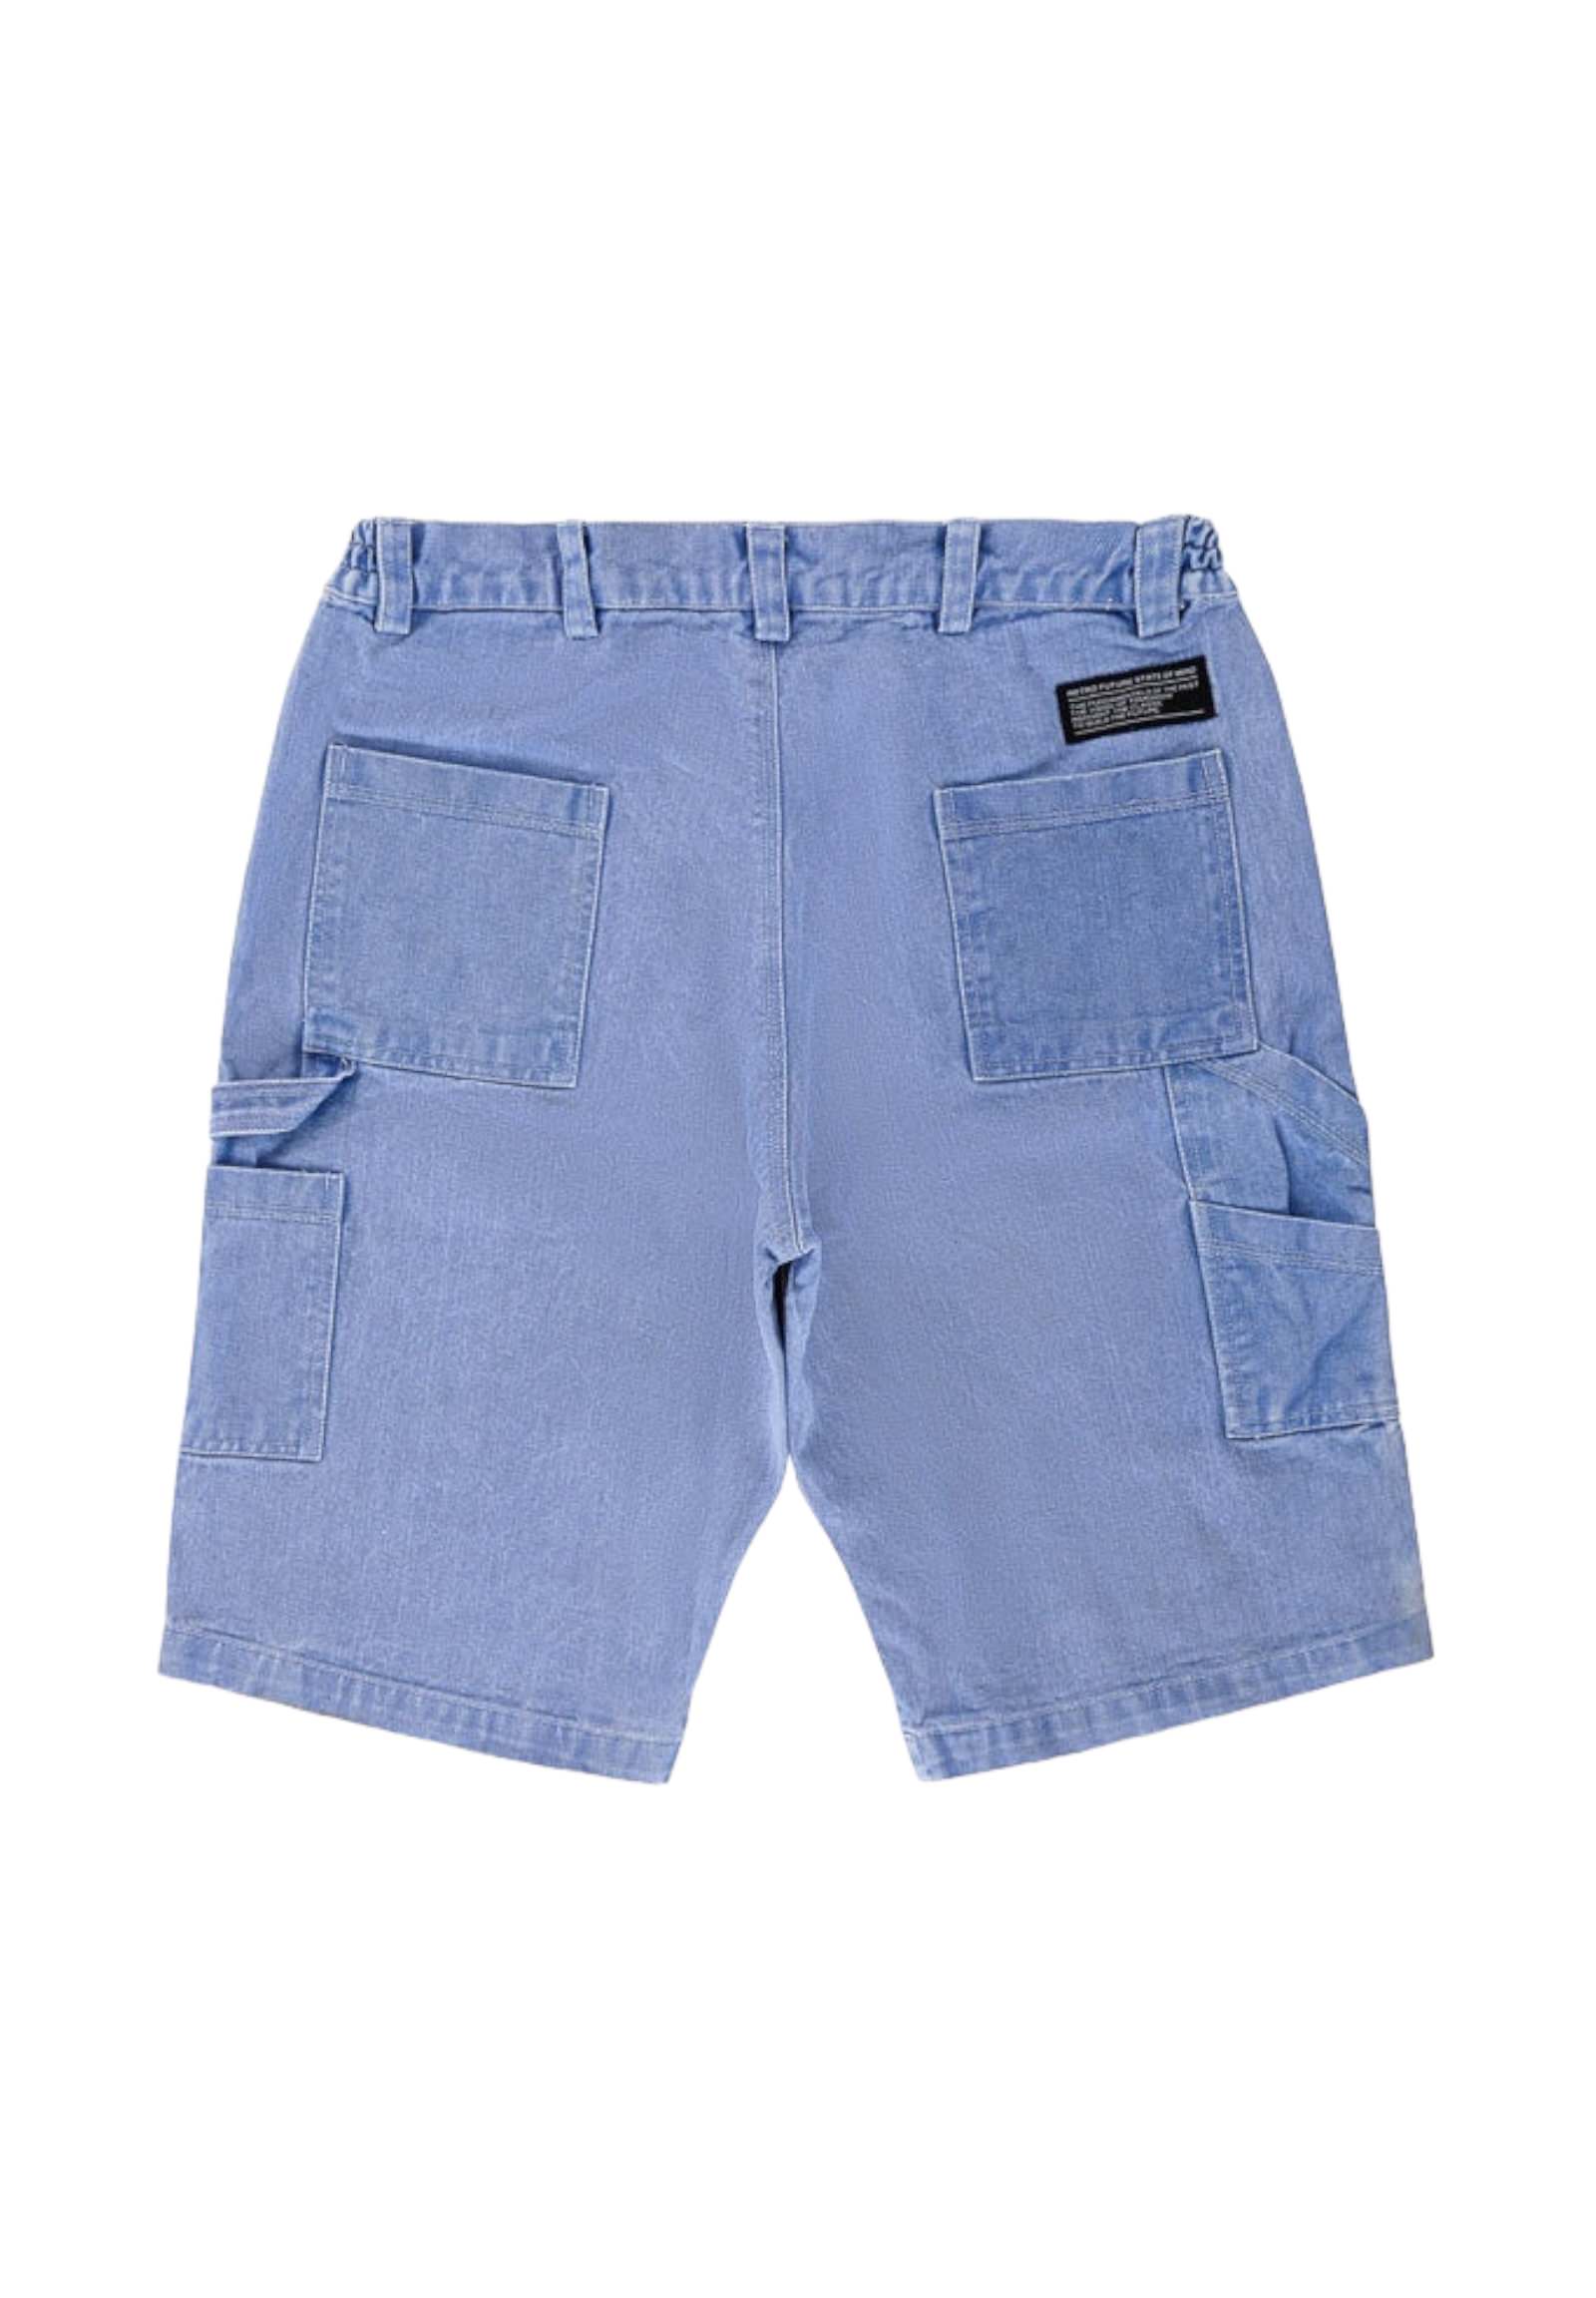 Bermuda Bmsom4104 Light Blu Jeans